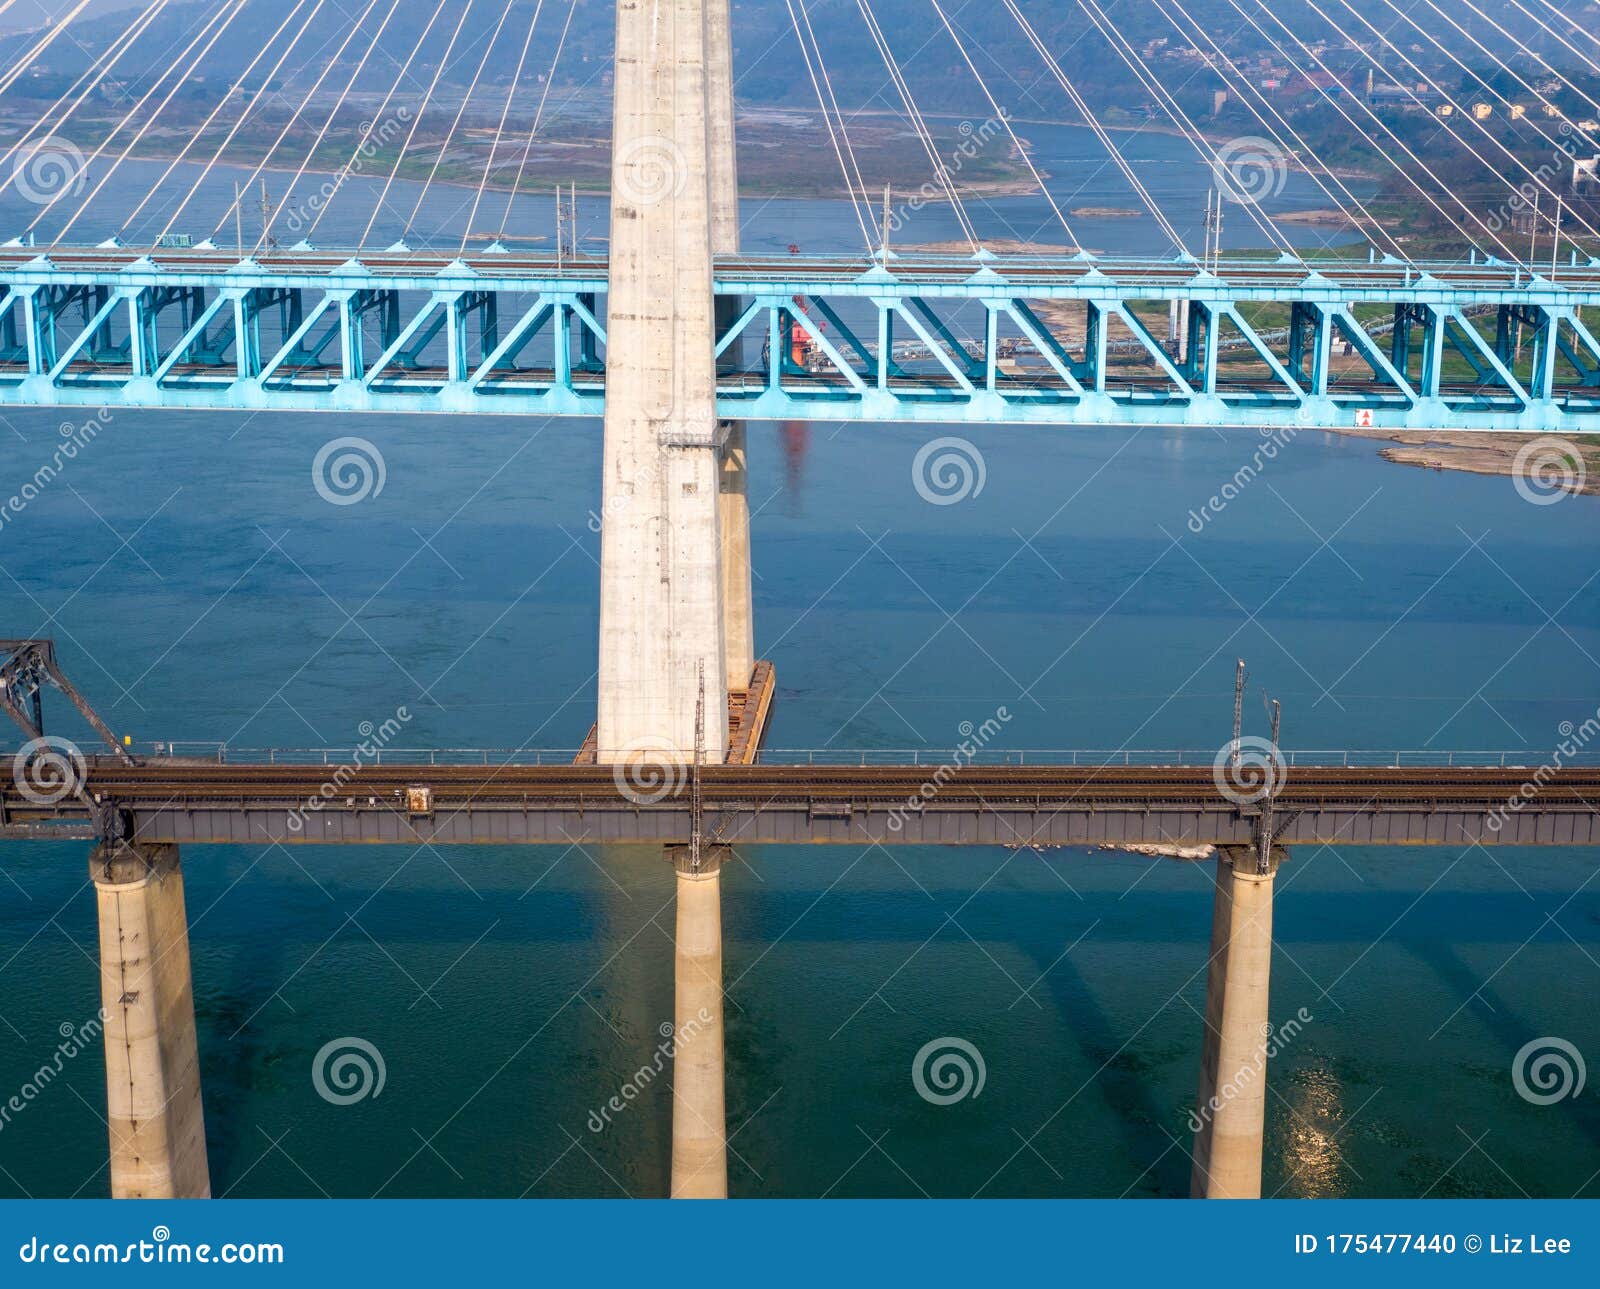 bird view of old and new baishatuo yangtze river railway bridge under blue sky